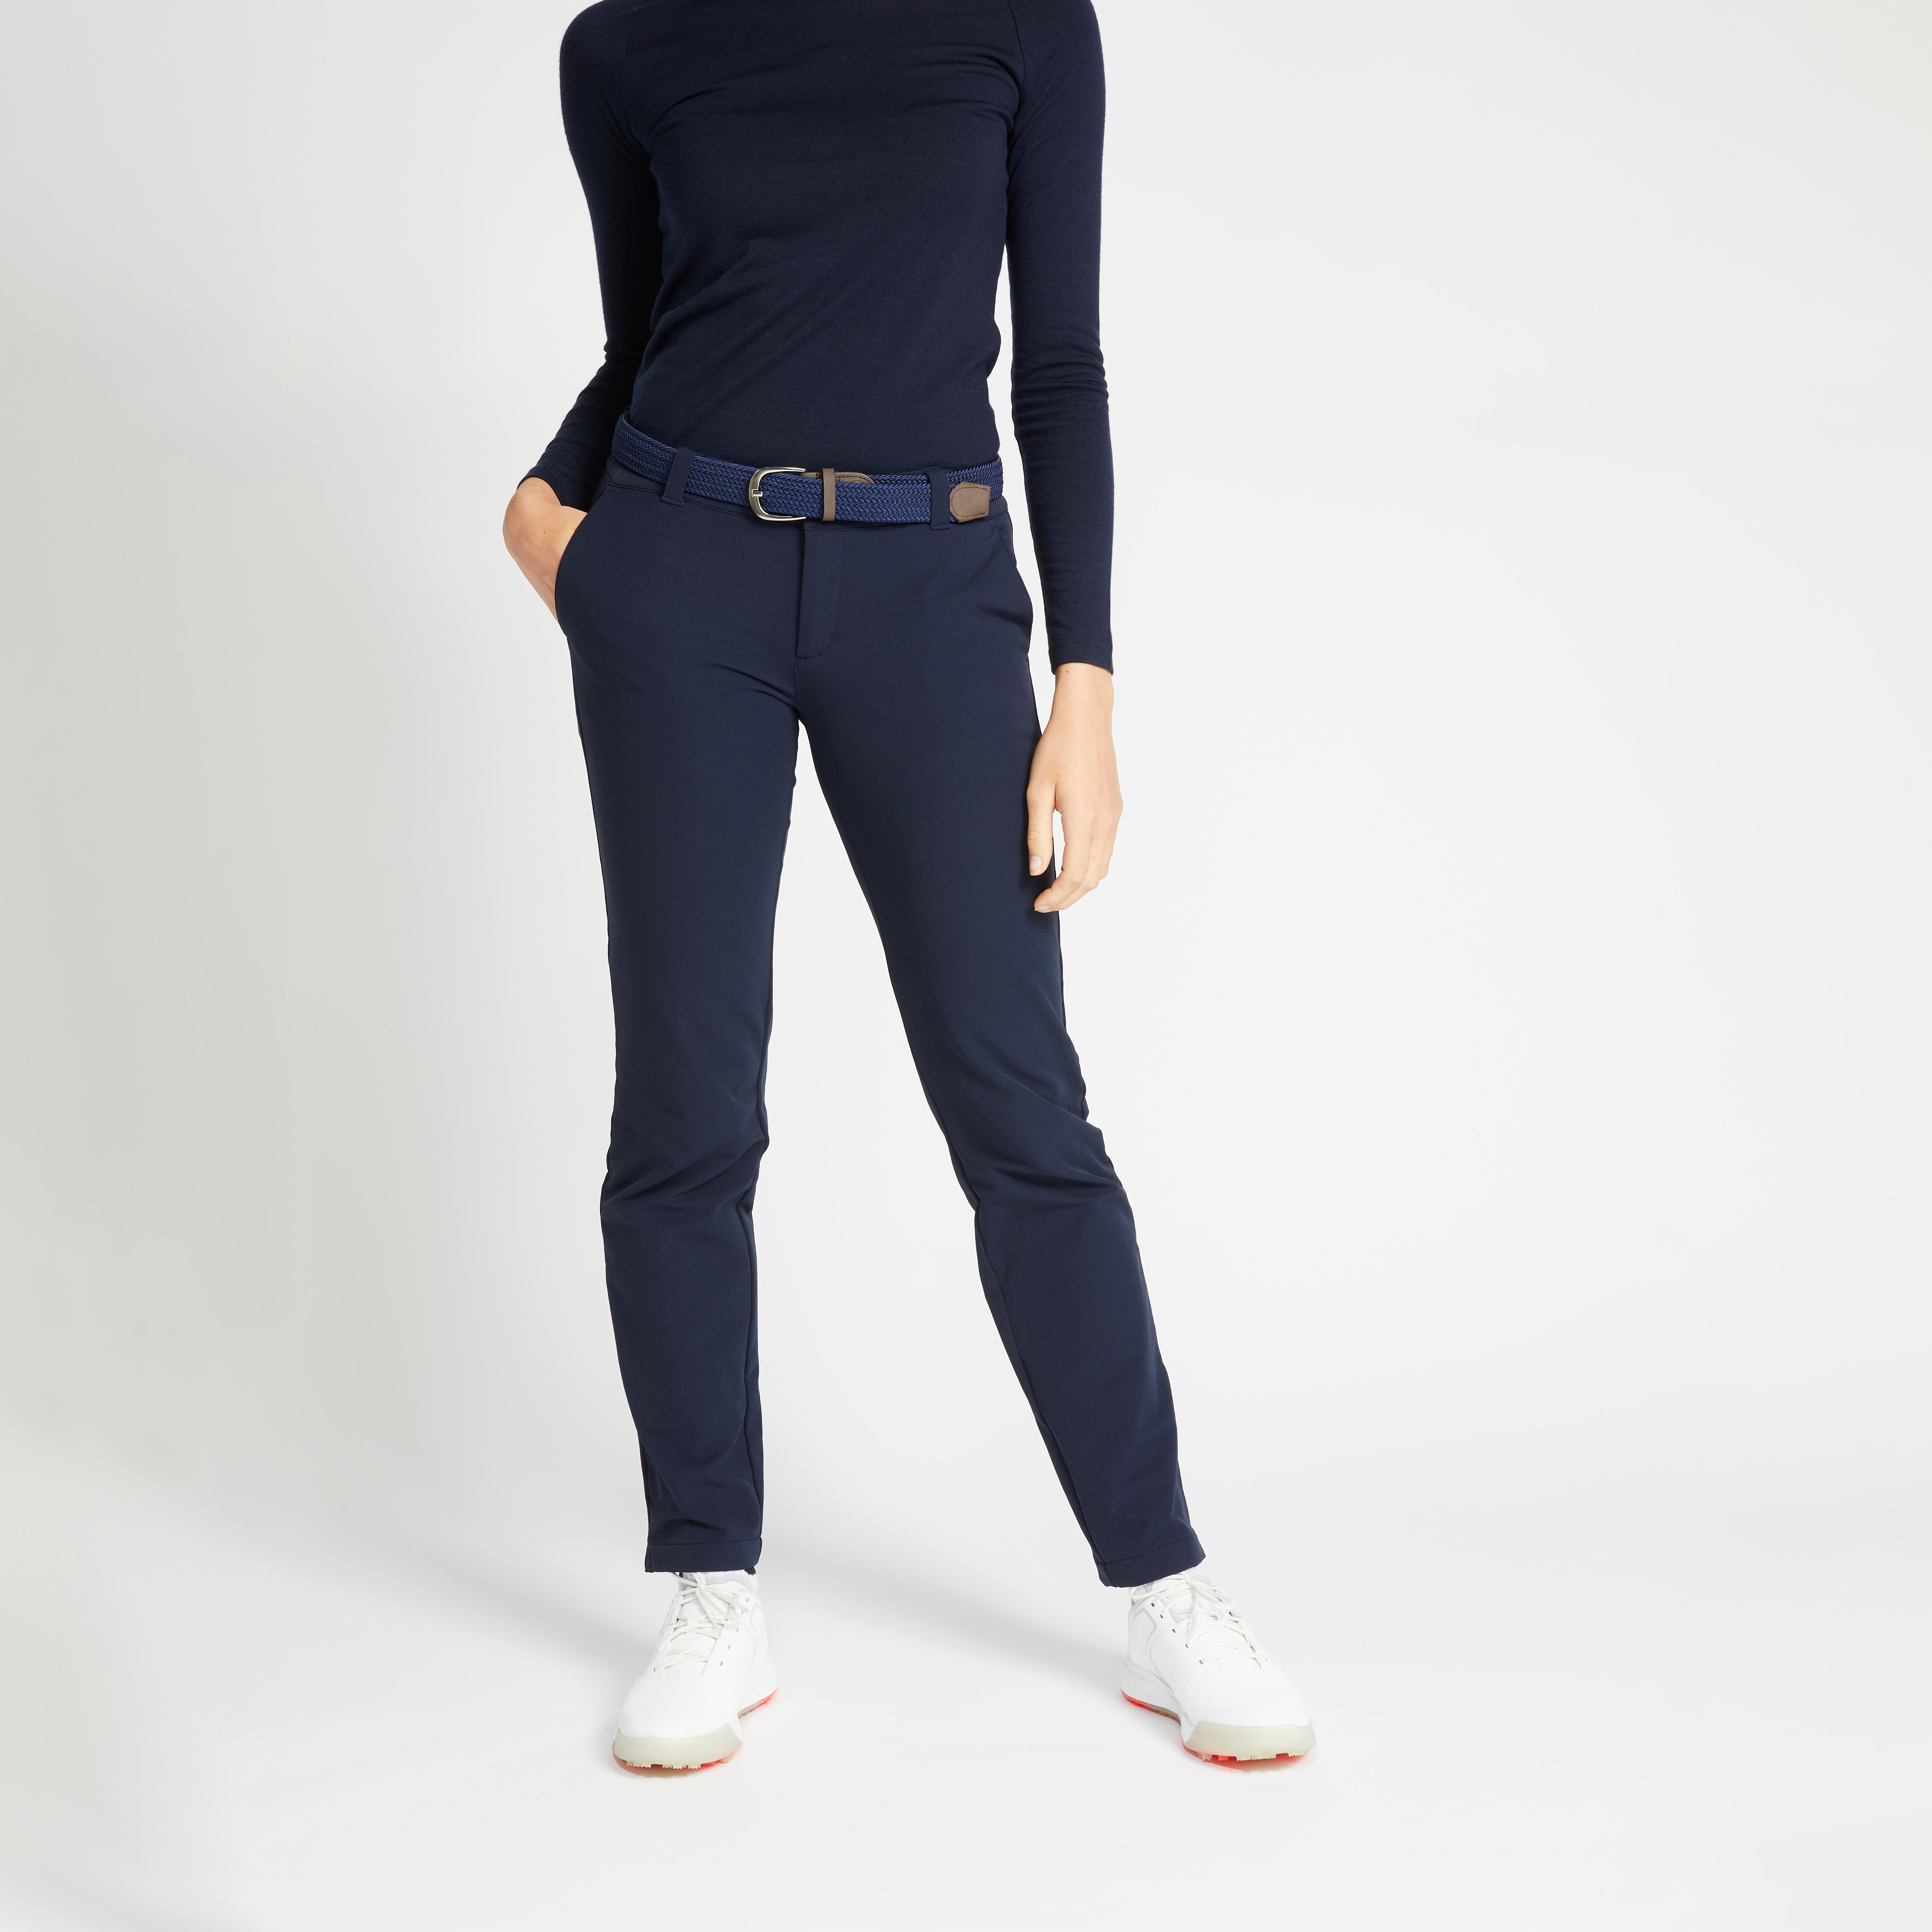 Pantalon Golf Cw500 Iarna Bleumarin Dama